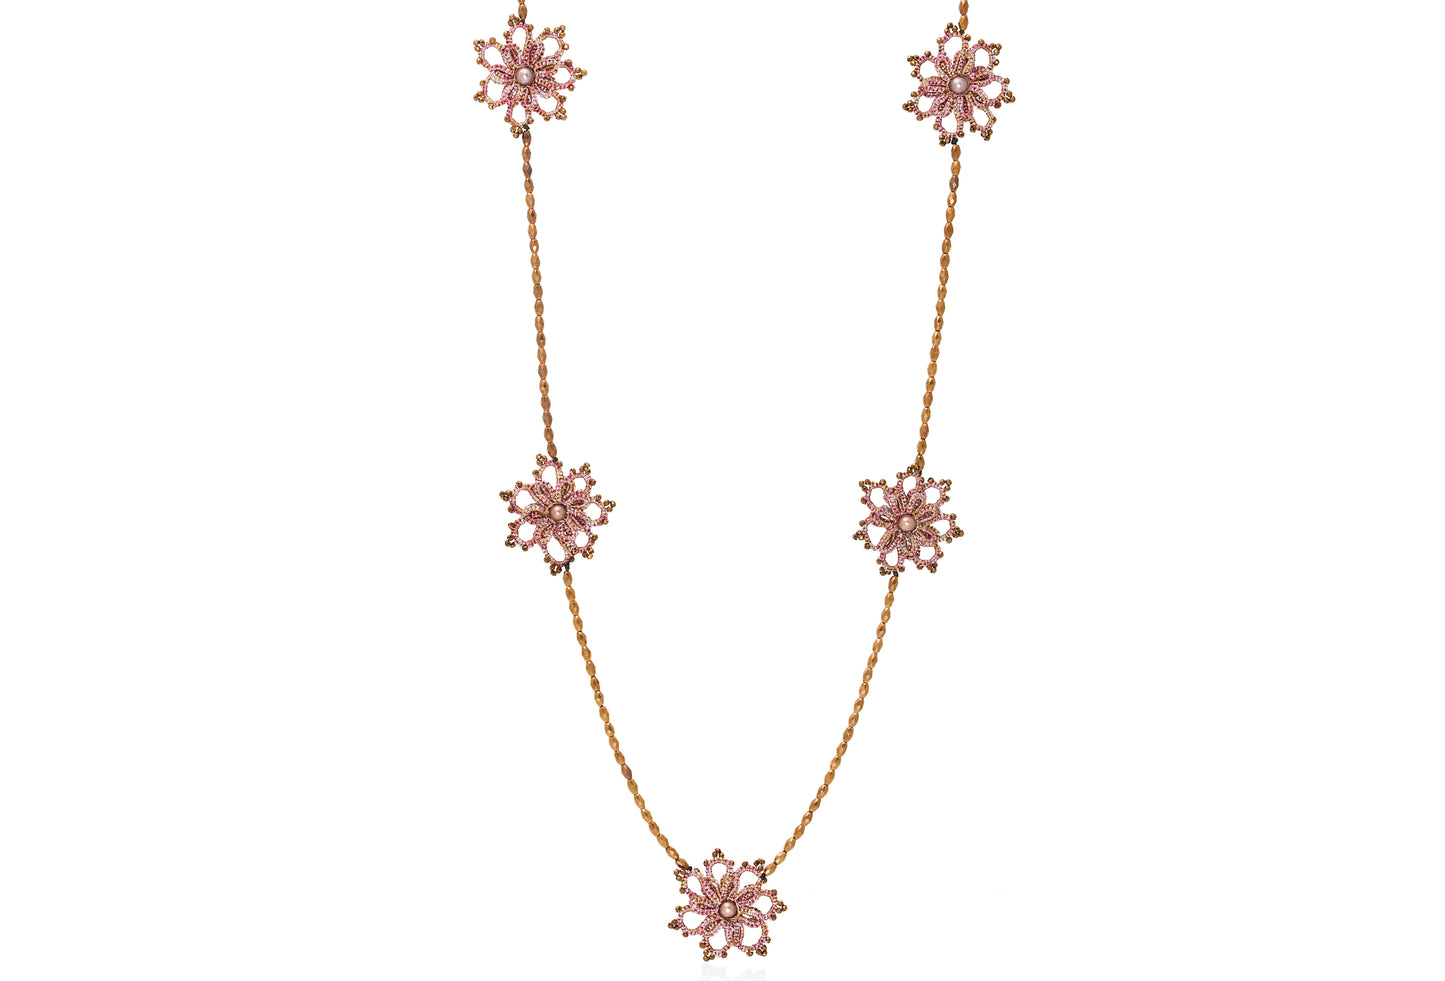 Rosette lace necklace, multi-peach bronze